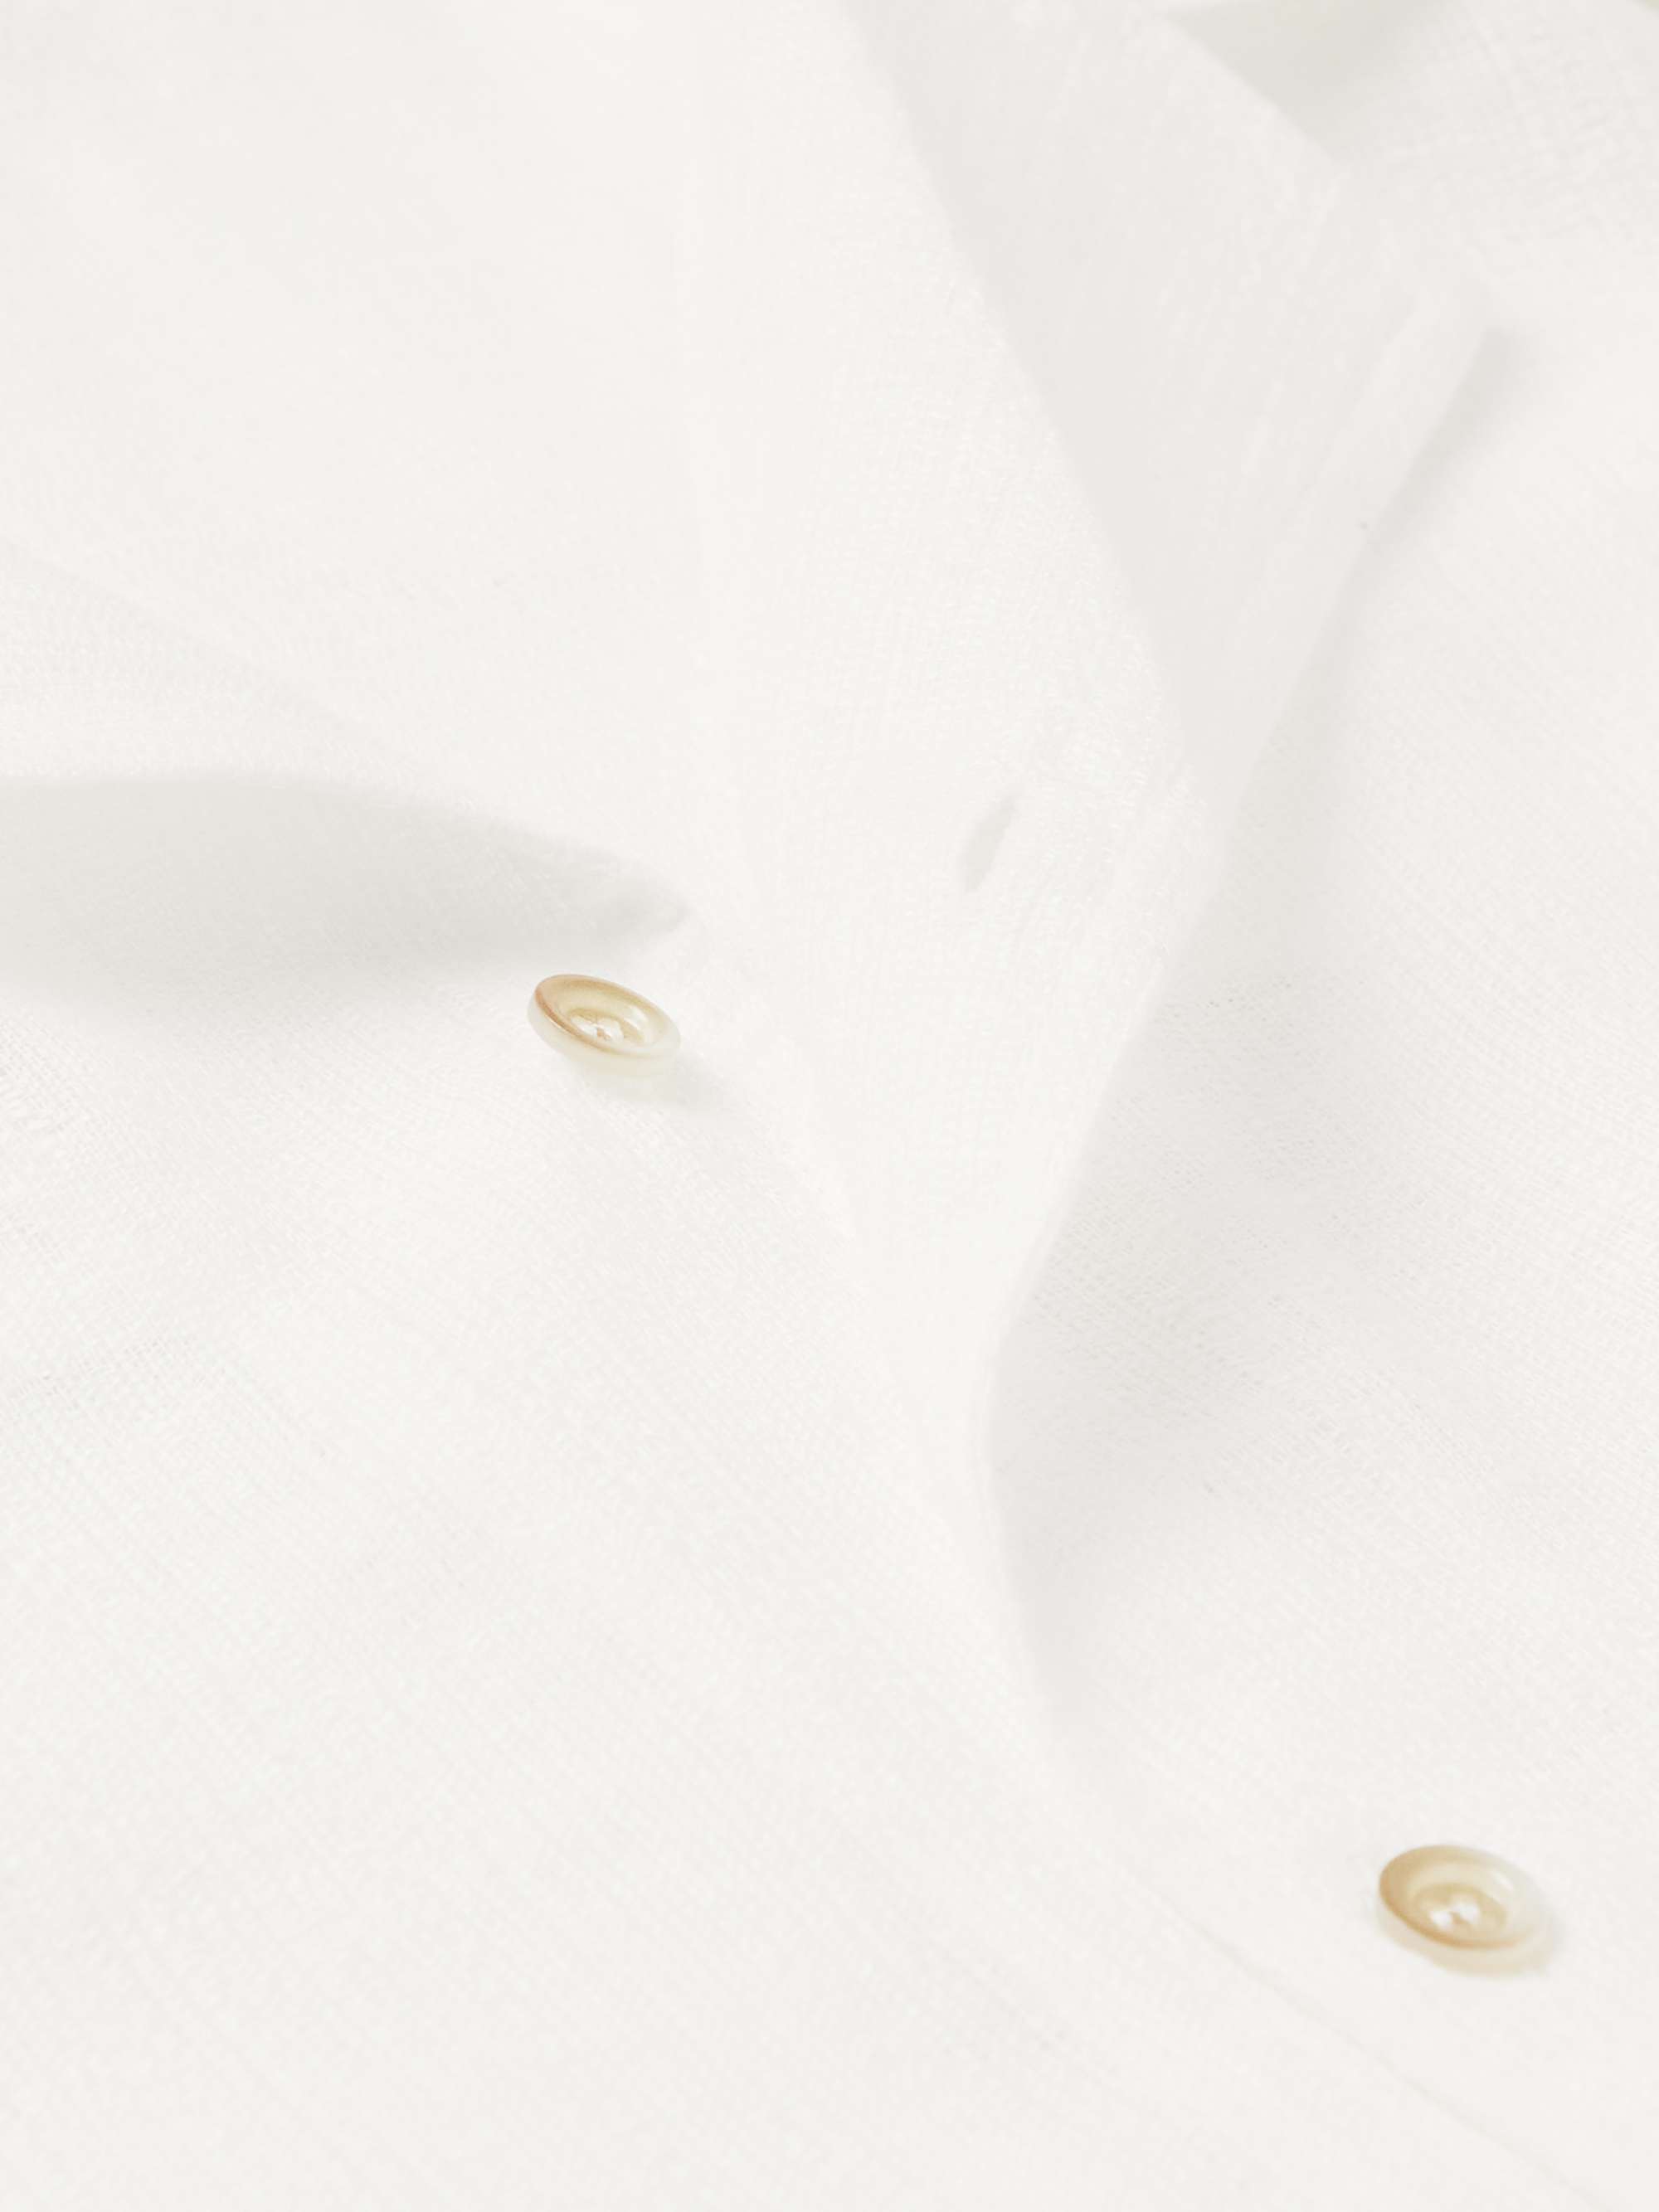 SÉFR Delian Cotton and Linen-Blend Shirt